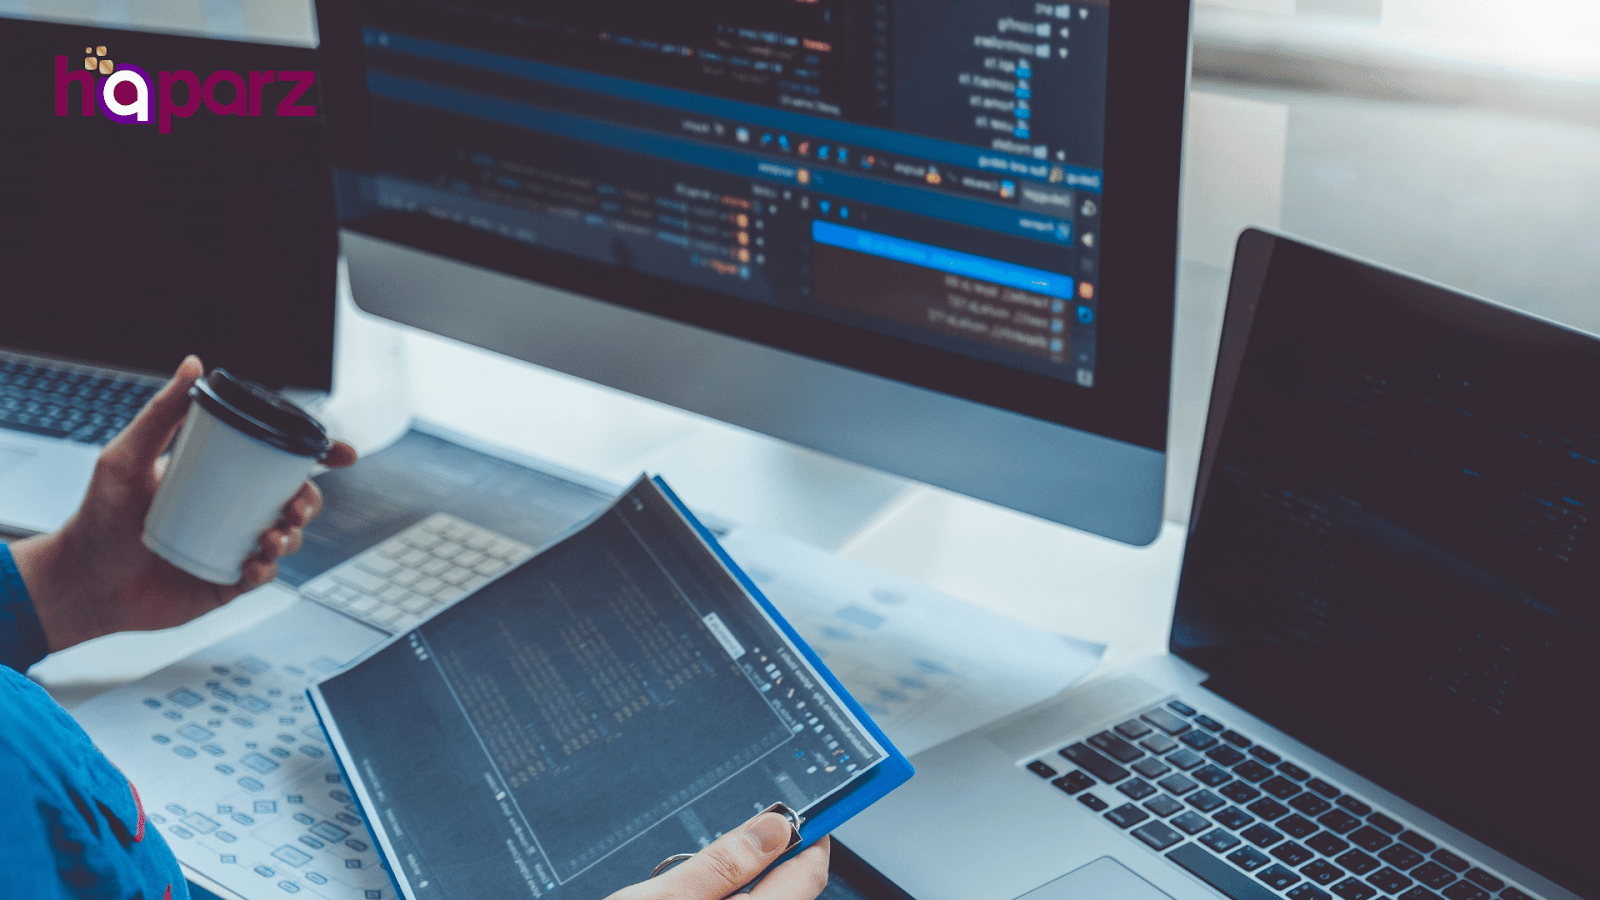 Hire dedicated Java Developer in Singapore

